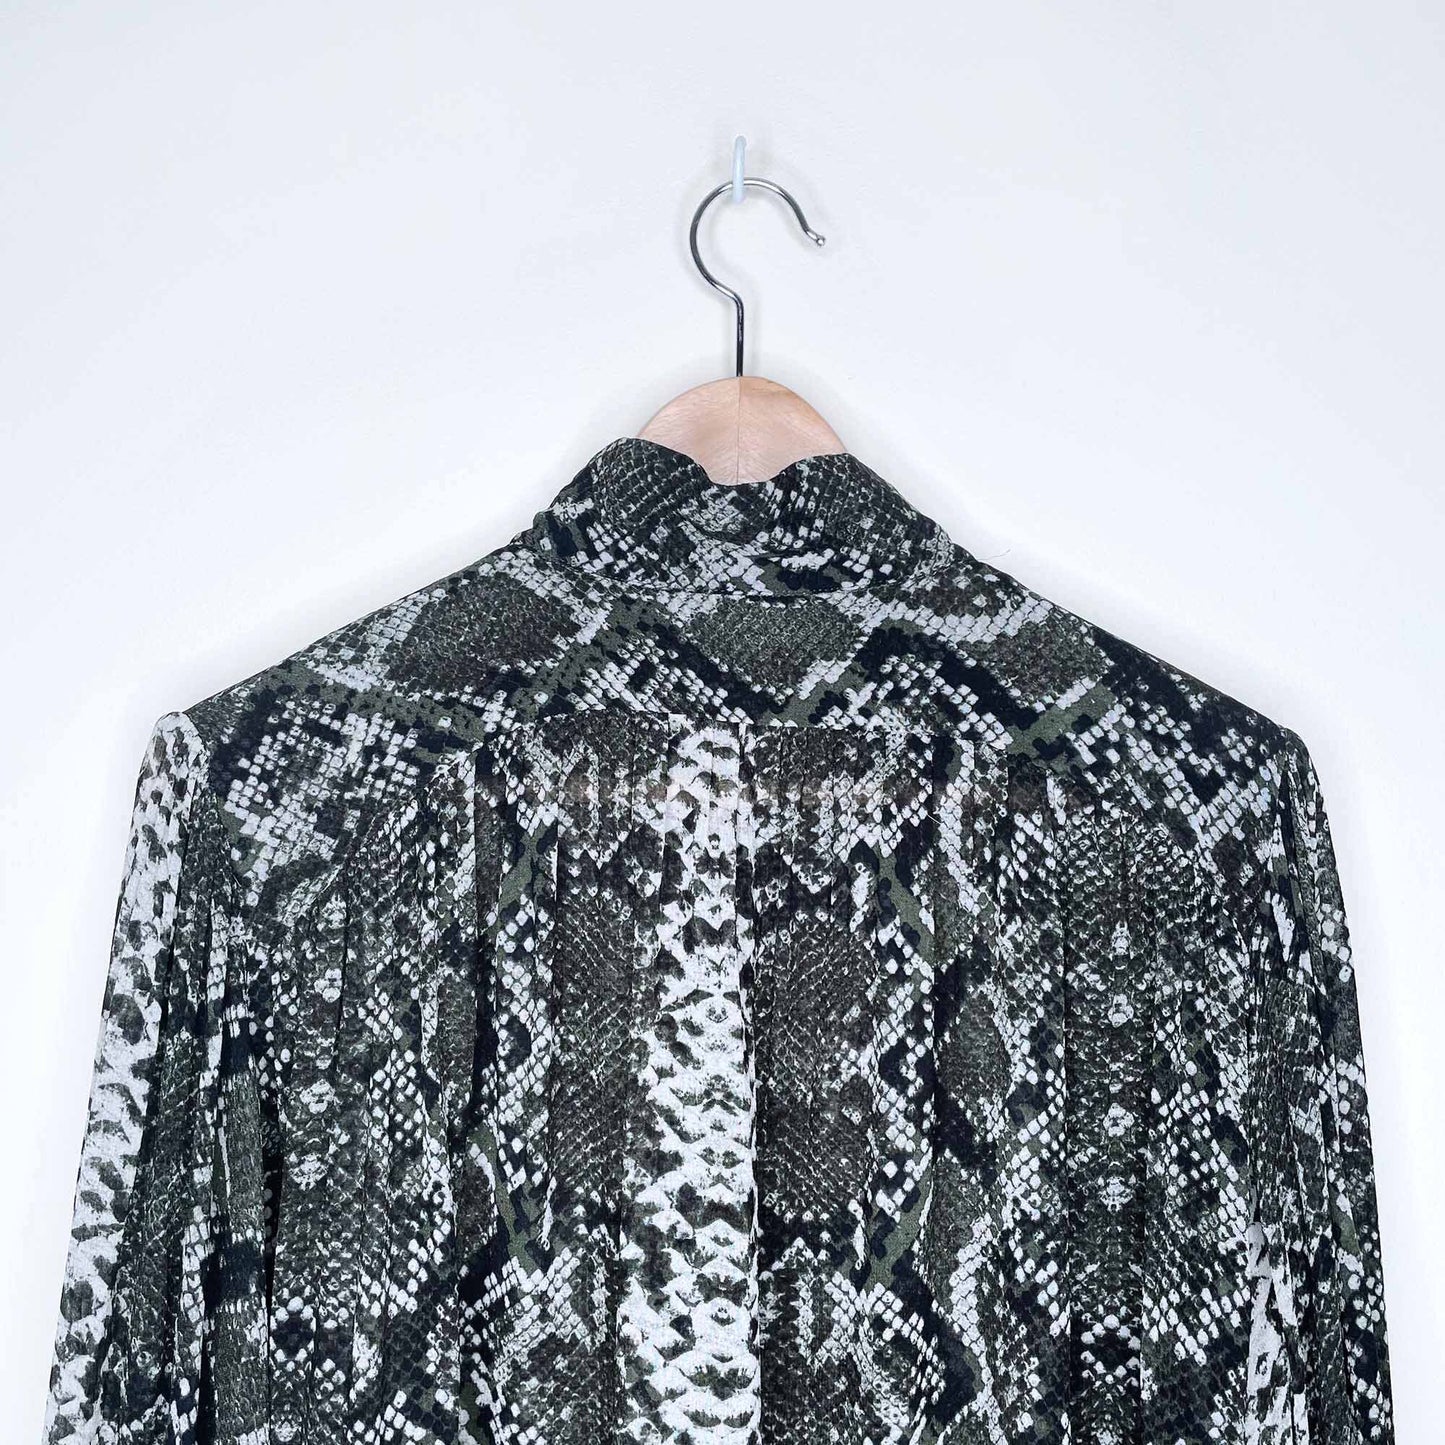 h&m airy chiffon snakeprint balloon sleeve blouse - size medium